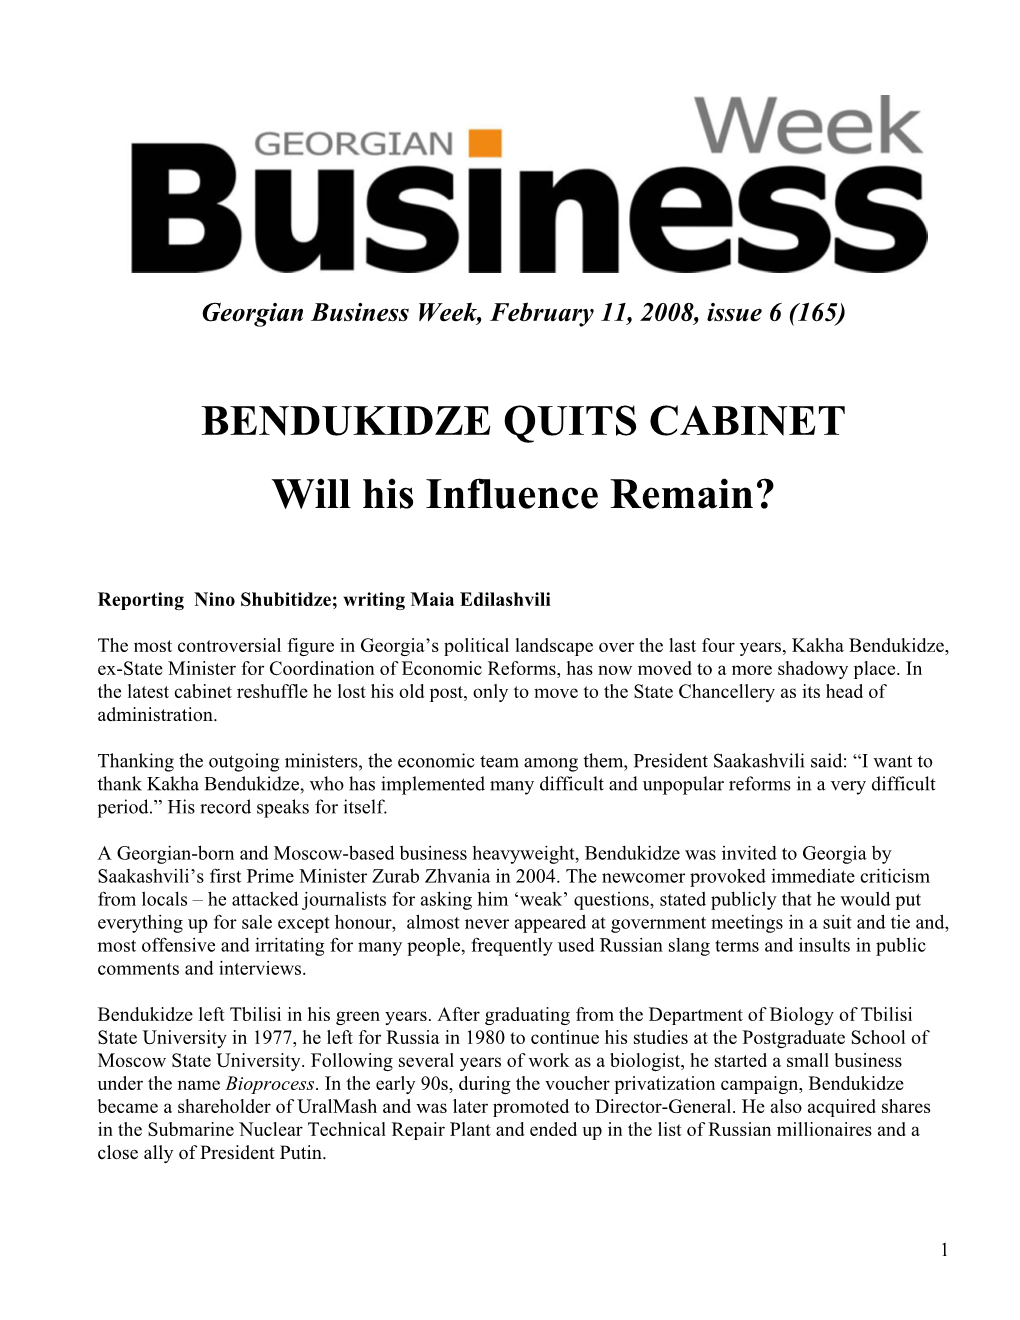 BENDUKIDZE QUITS CABINET Will His Influence Remain?